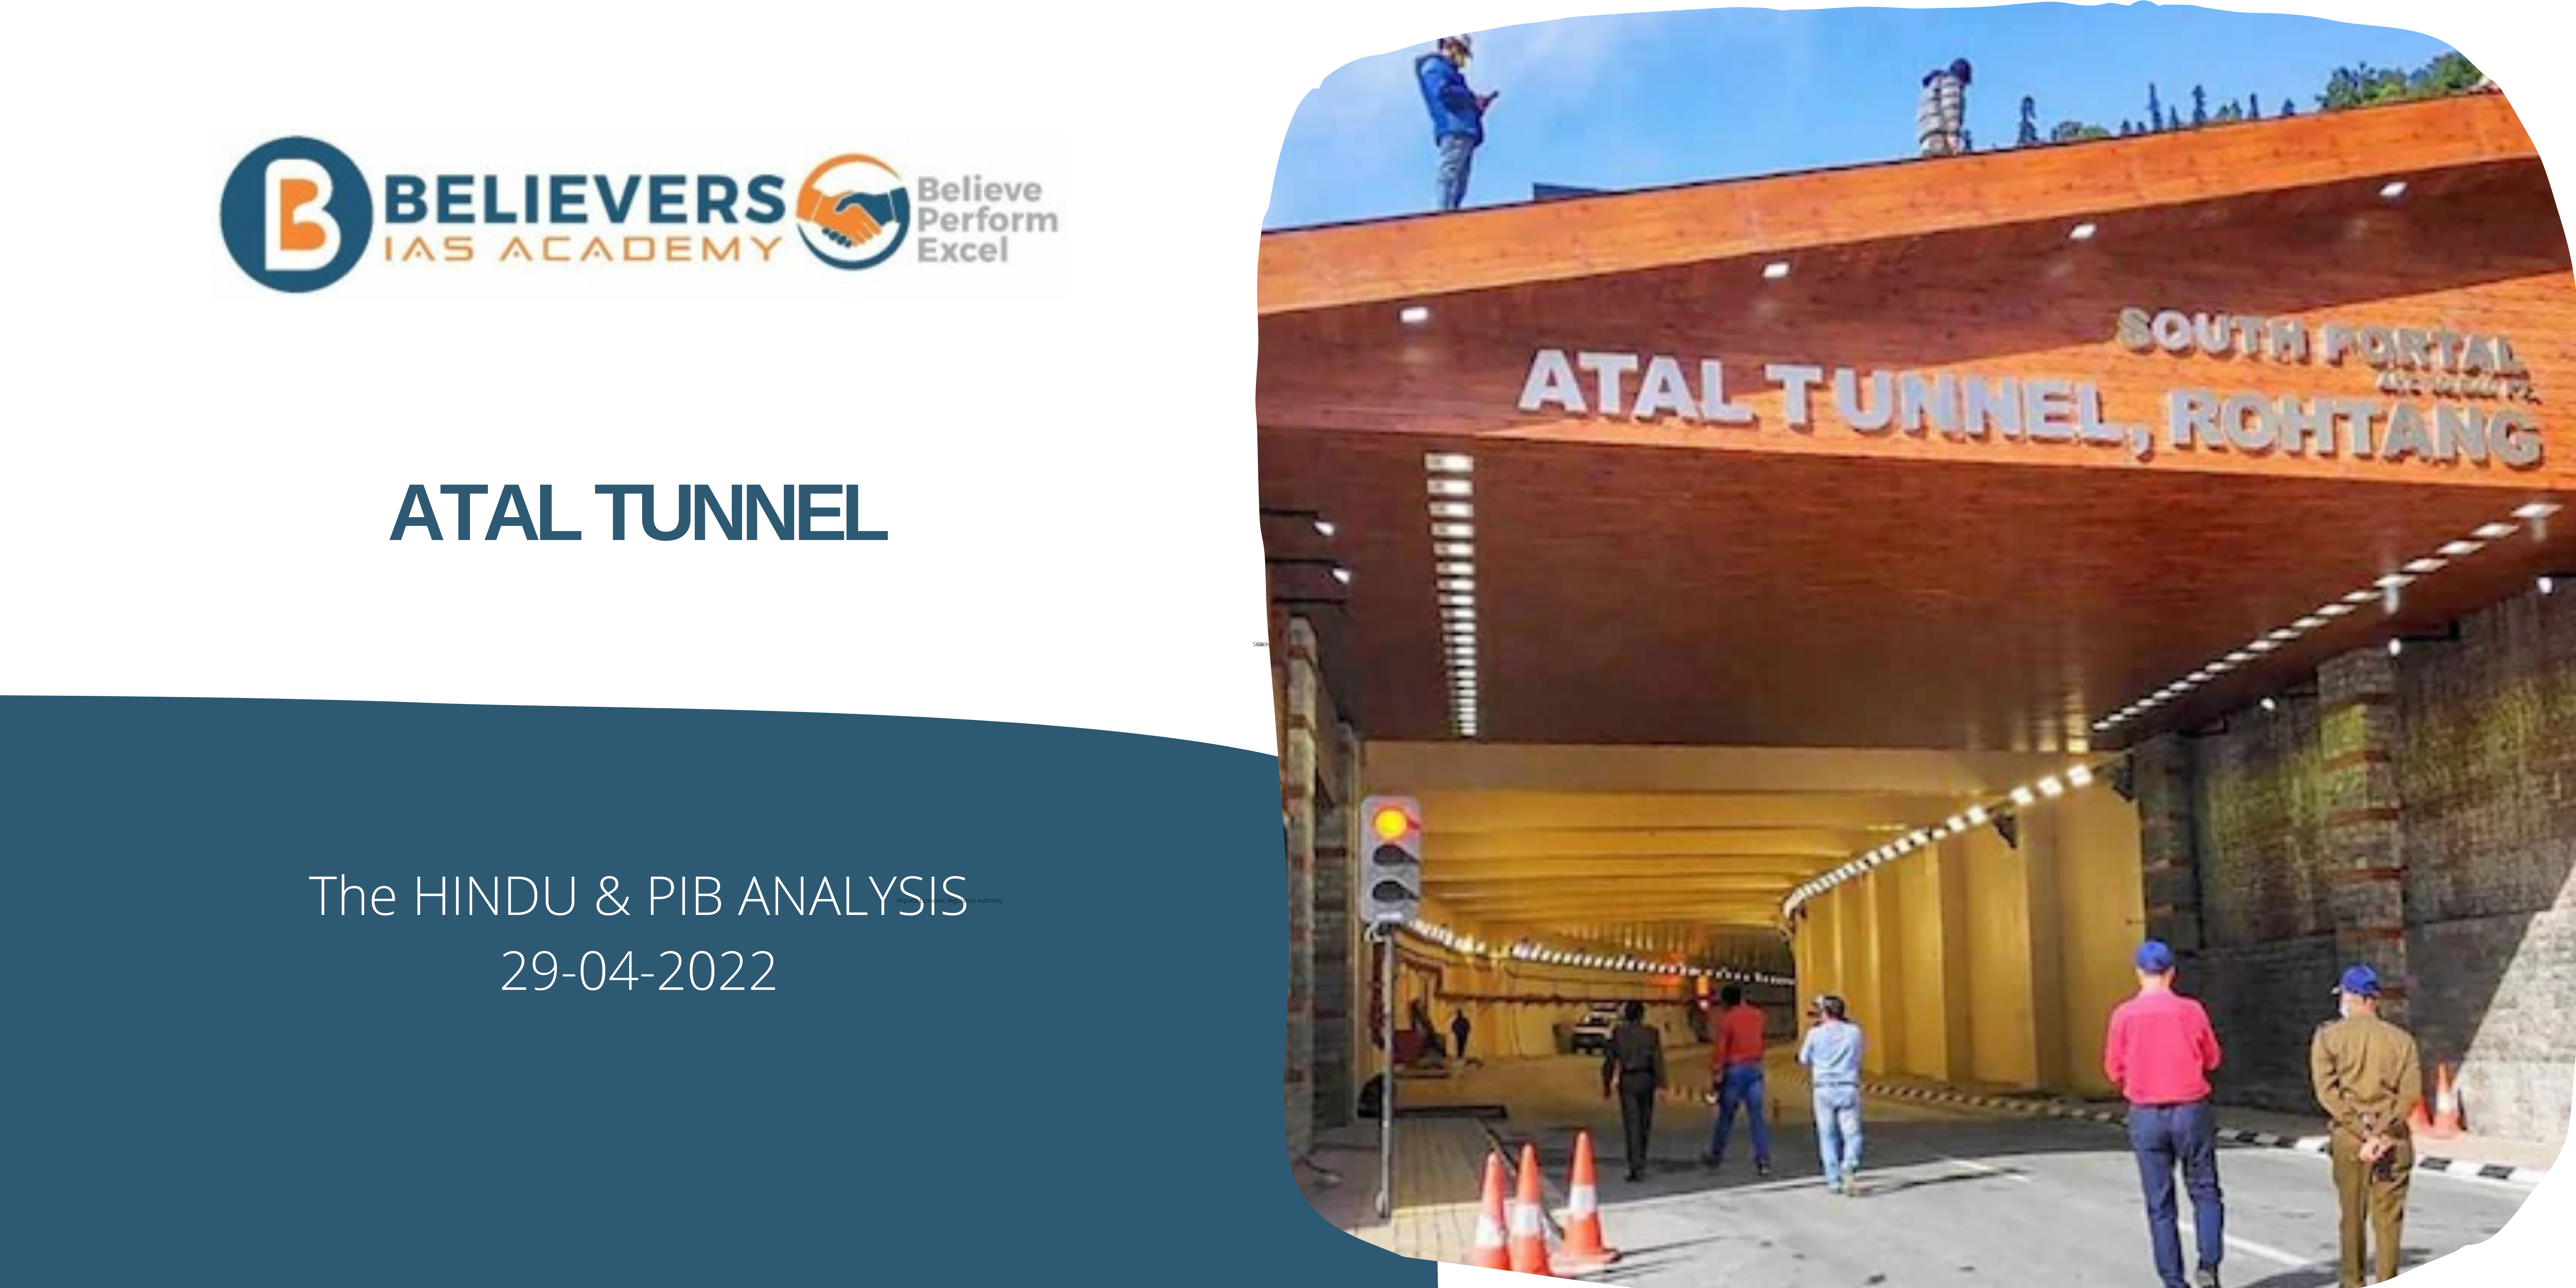 IAS Current affairs - Atal Tunnel